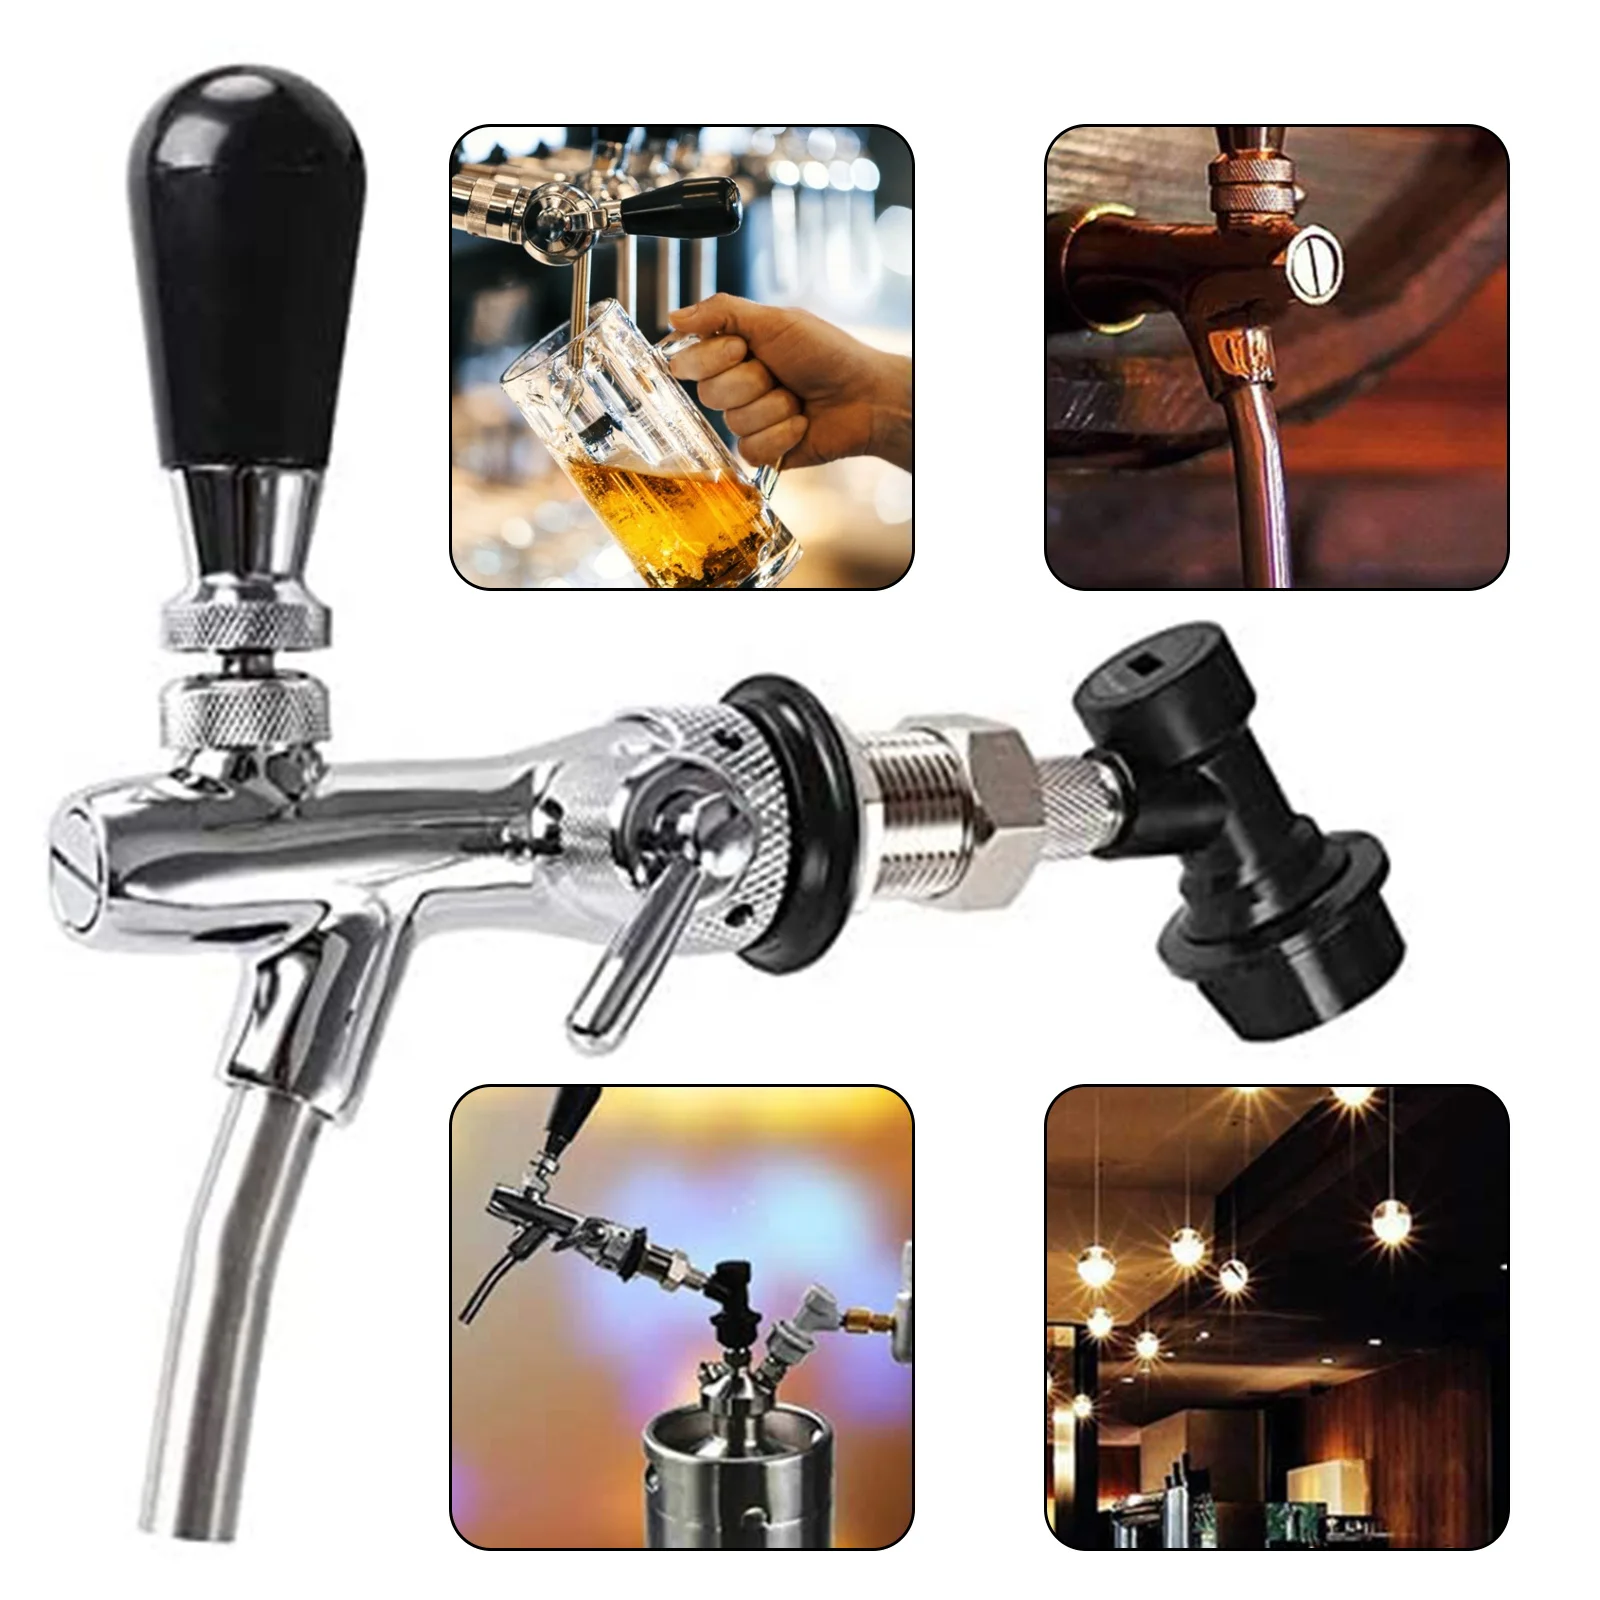 

Adjustable Beer Tap Faucet Stainless Steel Draft Beer Faucet Flow Controller Chrome Plating Shank G5/8 Tap Keg for Kegerator